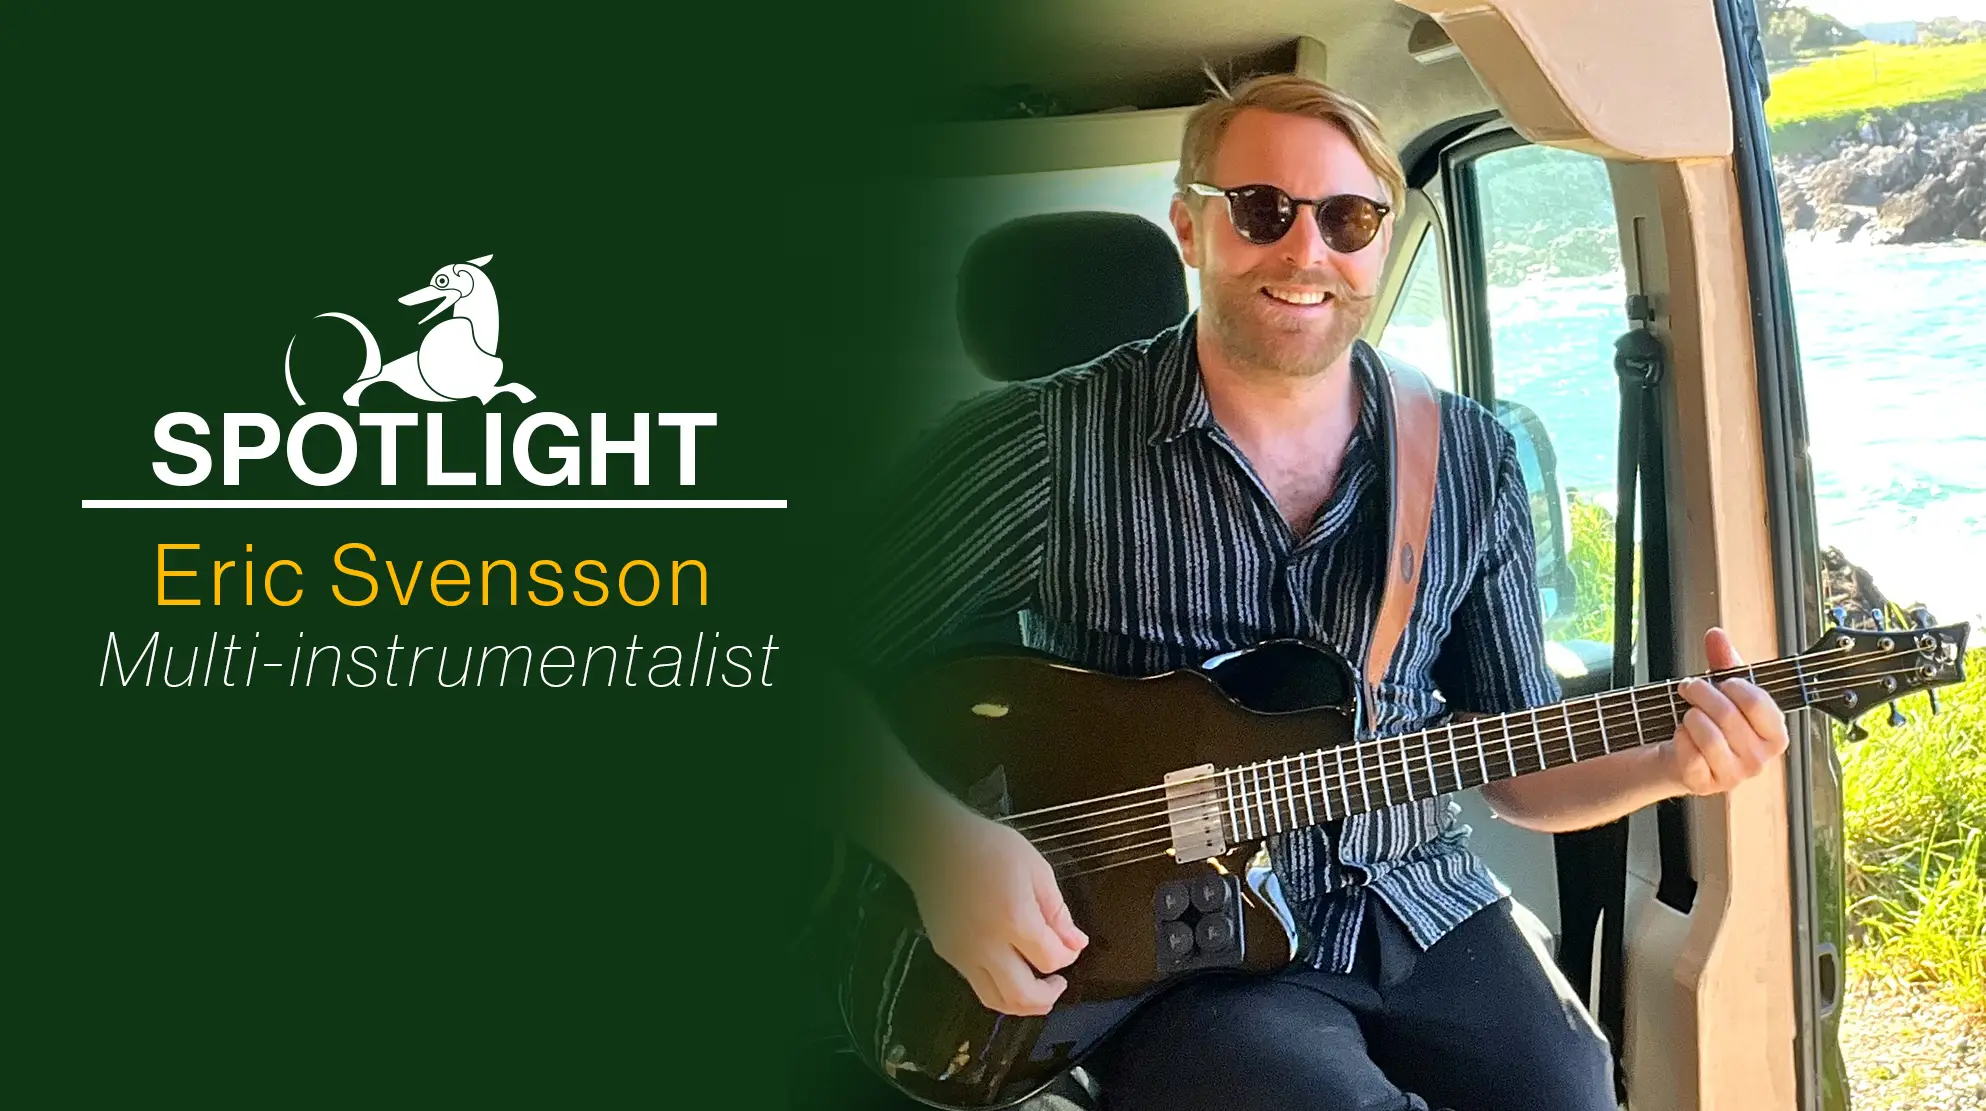 Eric Svensson carbon fiber guitar travel